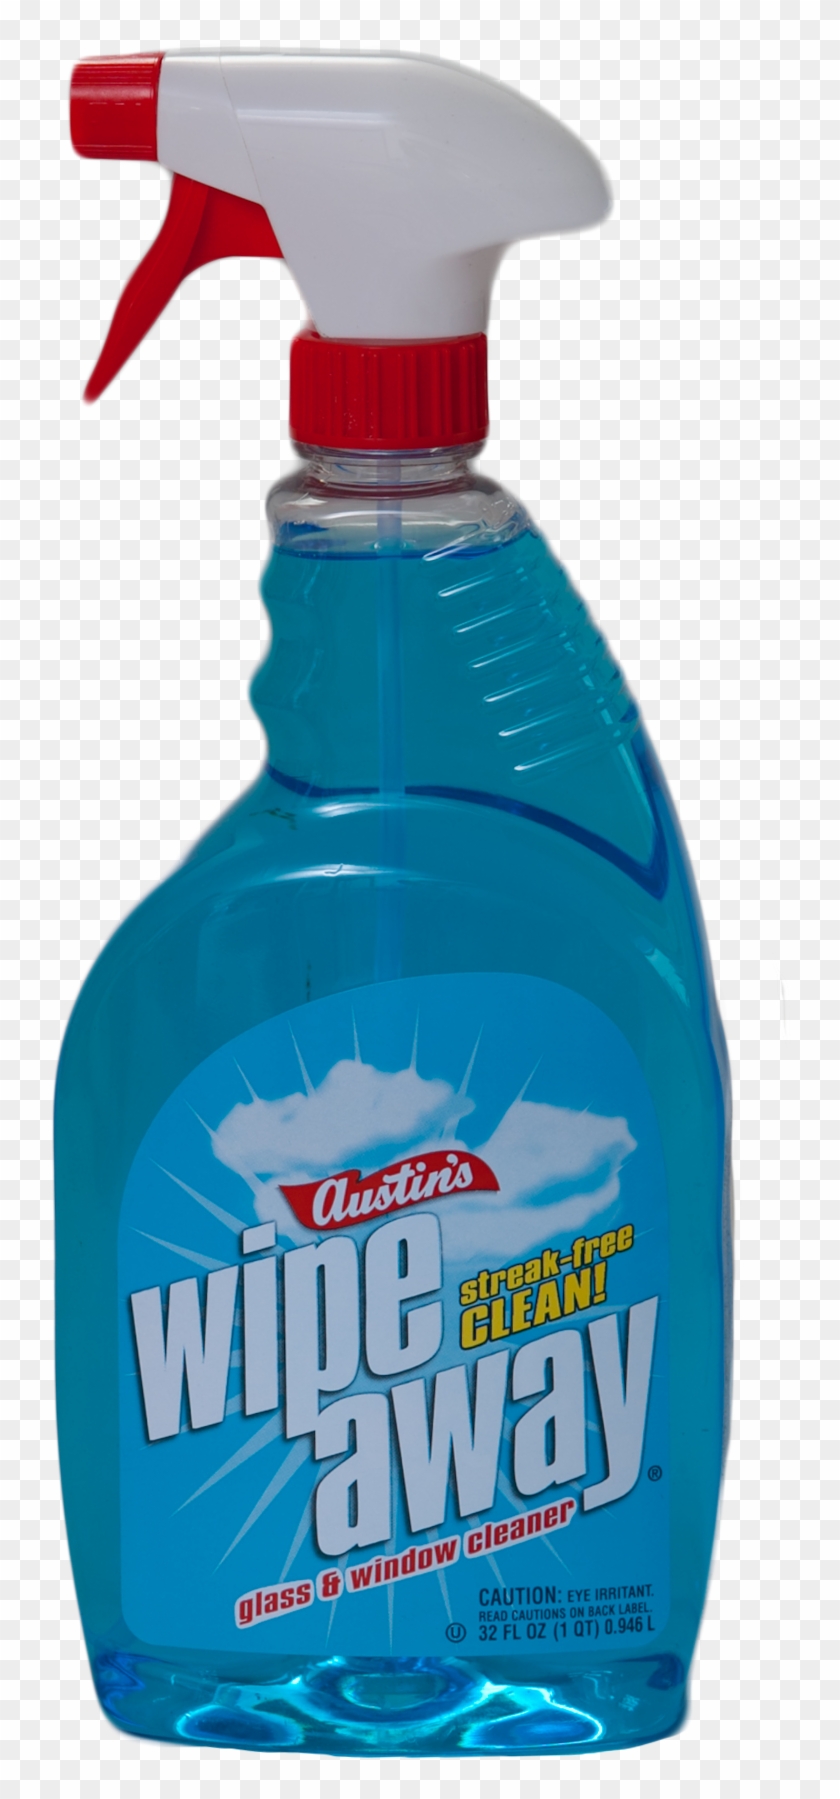 Wipe Away Glass Cleaner Trigger - Plastic Bottle Clipart #3185965